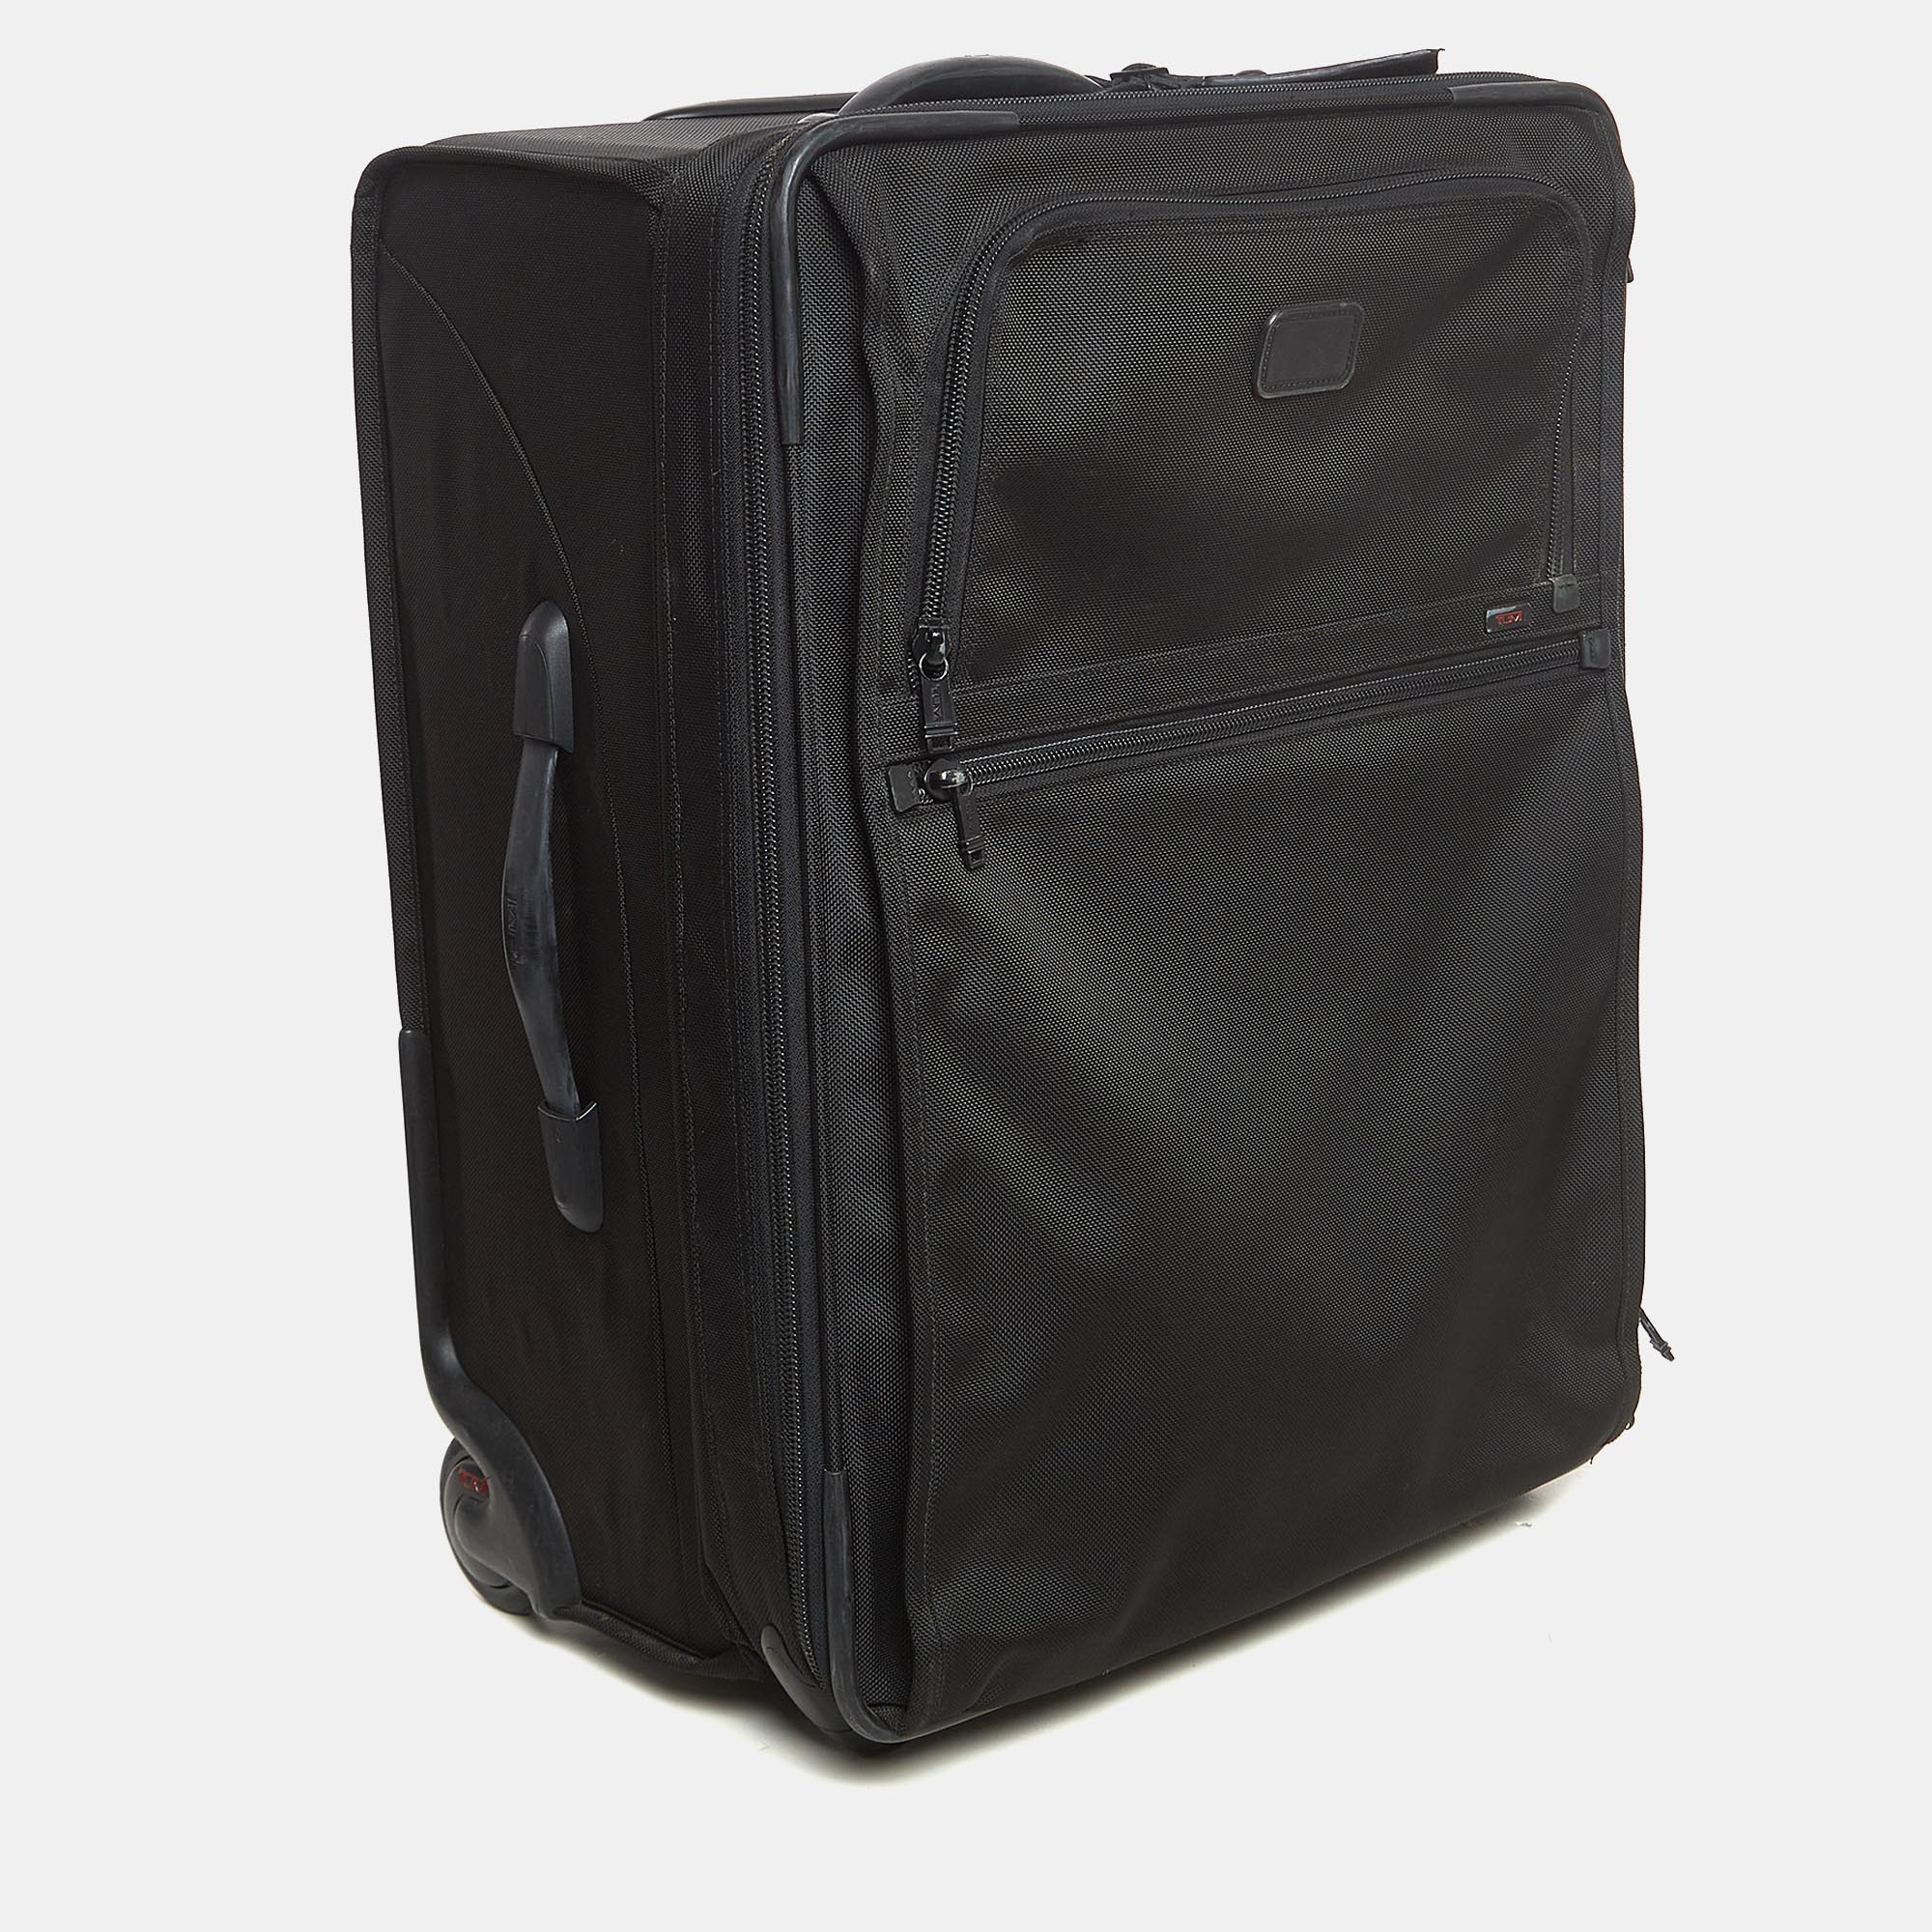 TUMI Black Nylon 2 Wheeled Alpha Extended Trip Expandable Luggage